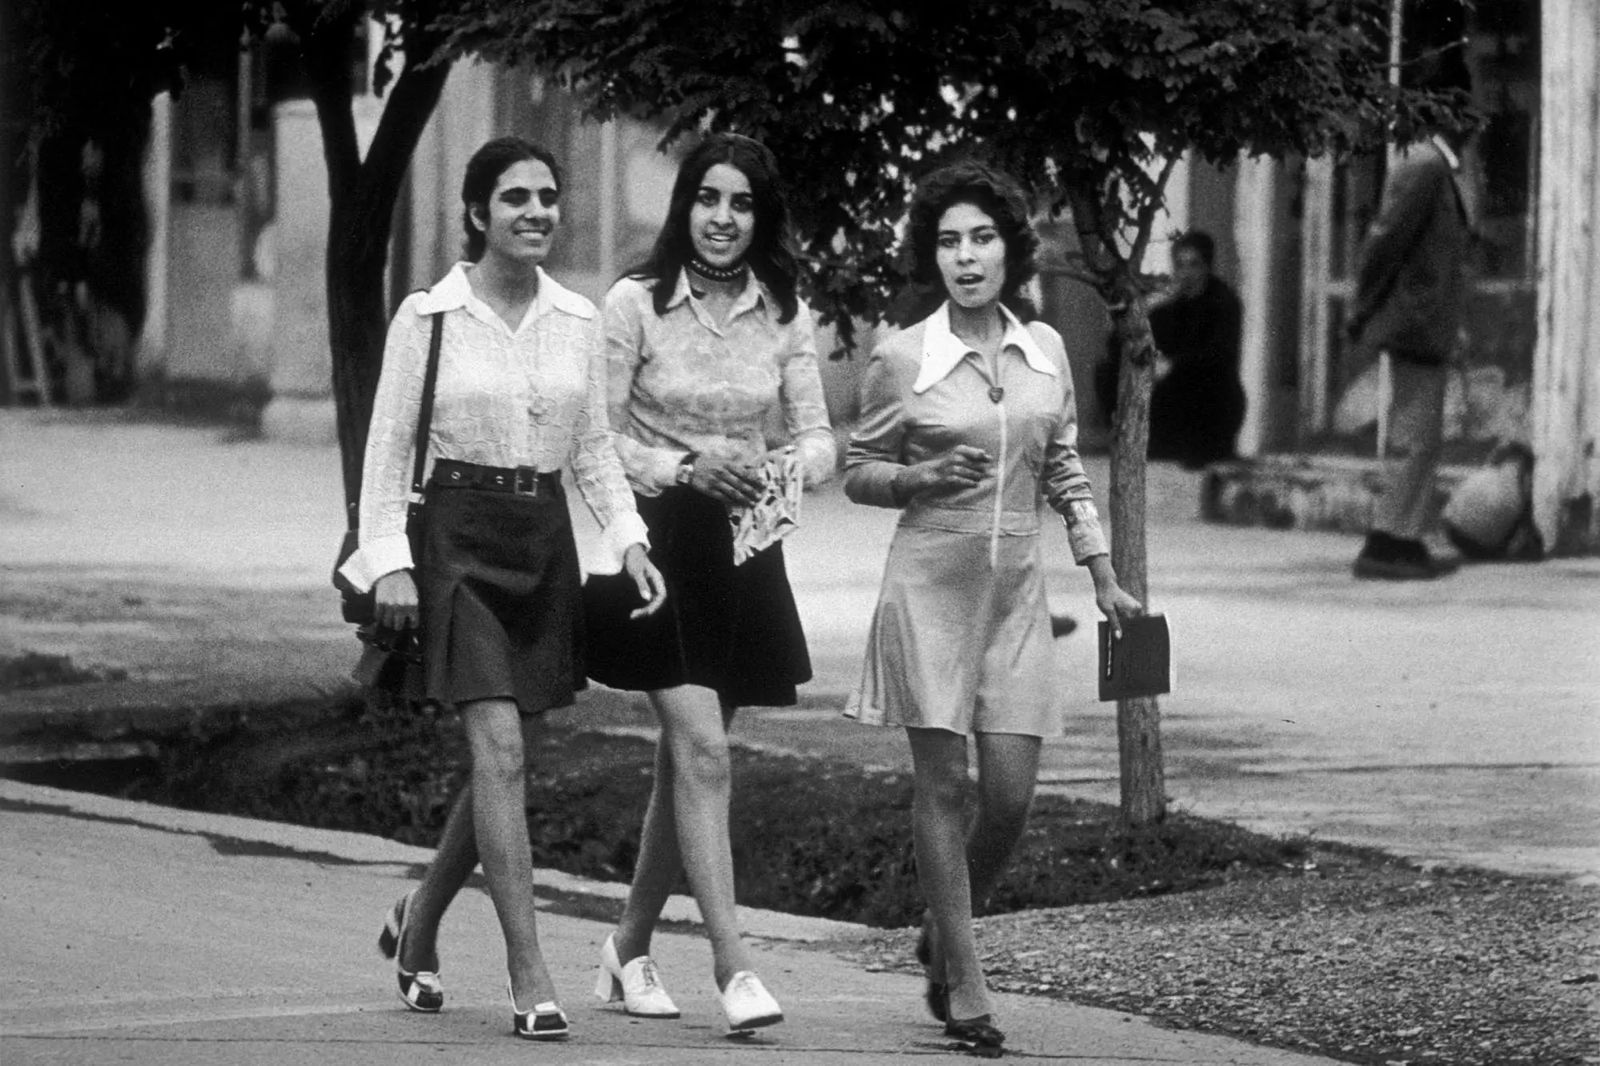 Afghanistan women in the seventies: Women walking in Afghanistan in miniskirts.; seventies; Afghanistan